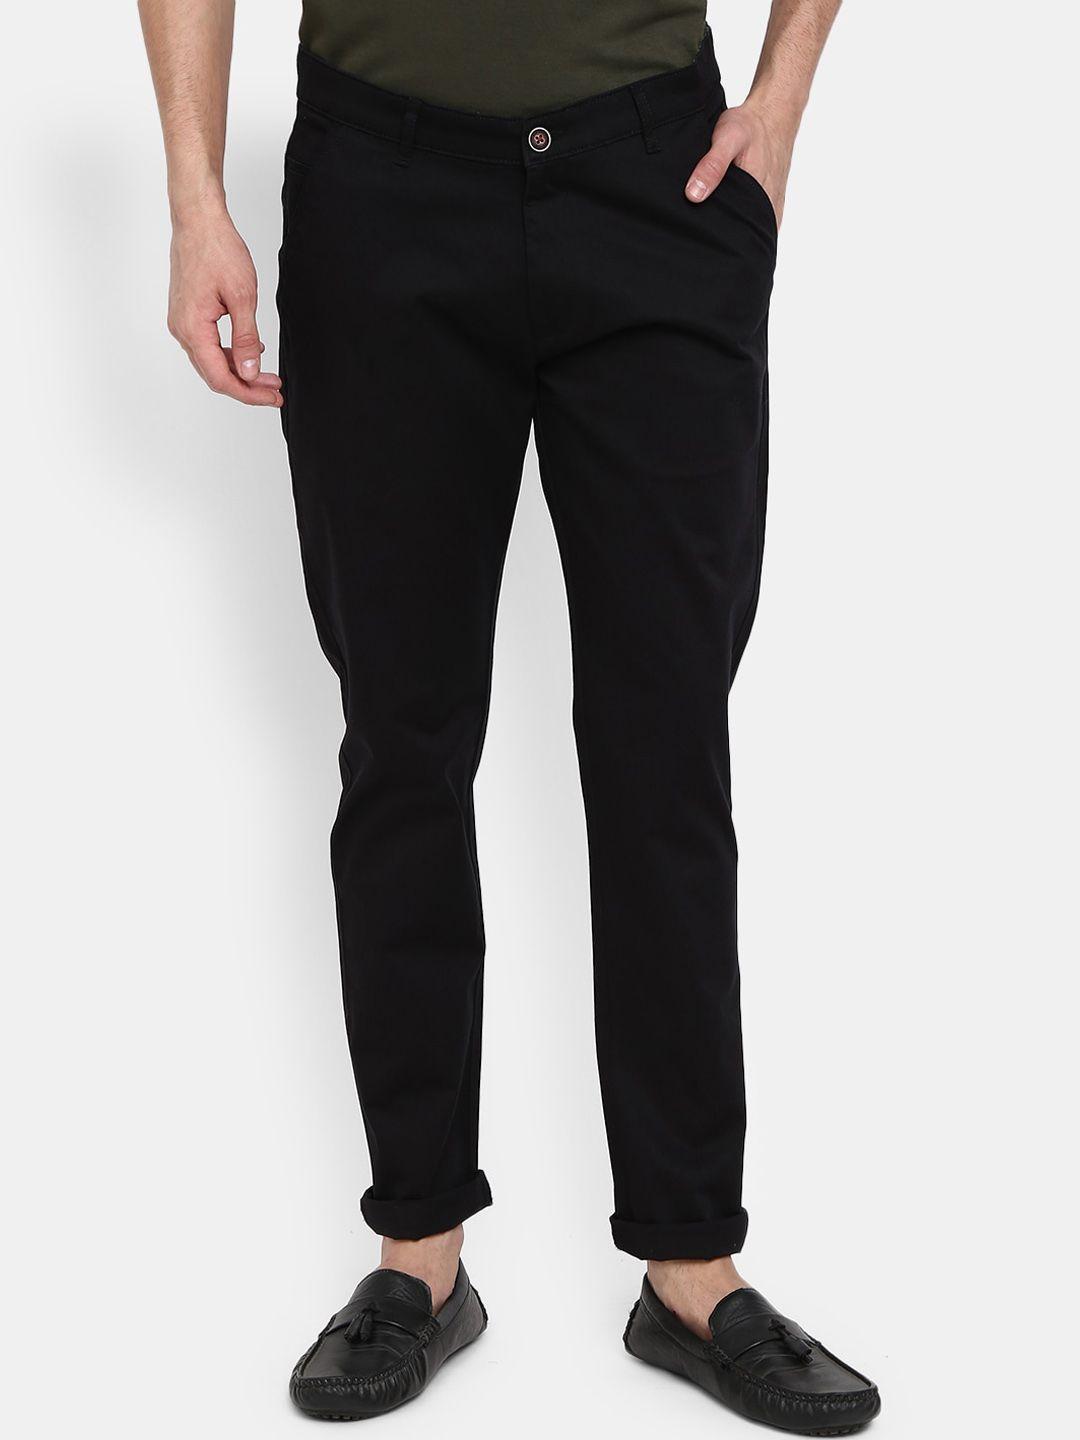 v-mart men black classic slim fit chinos trousers